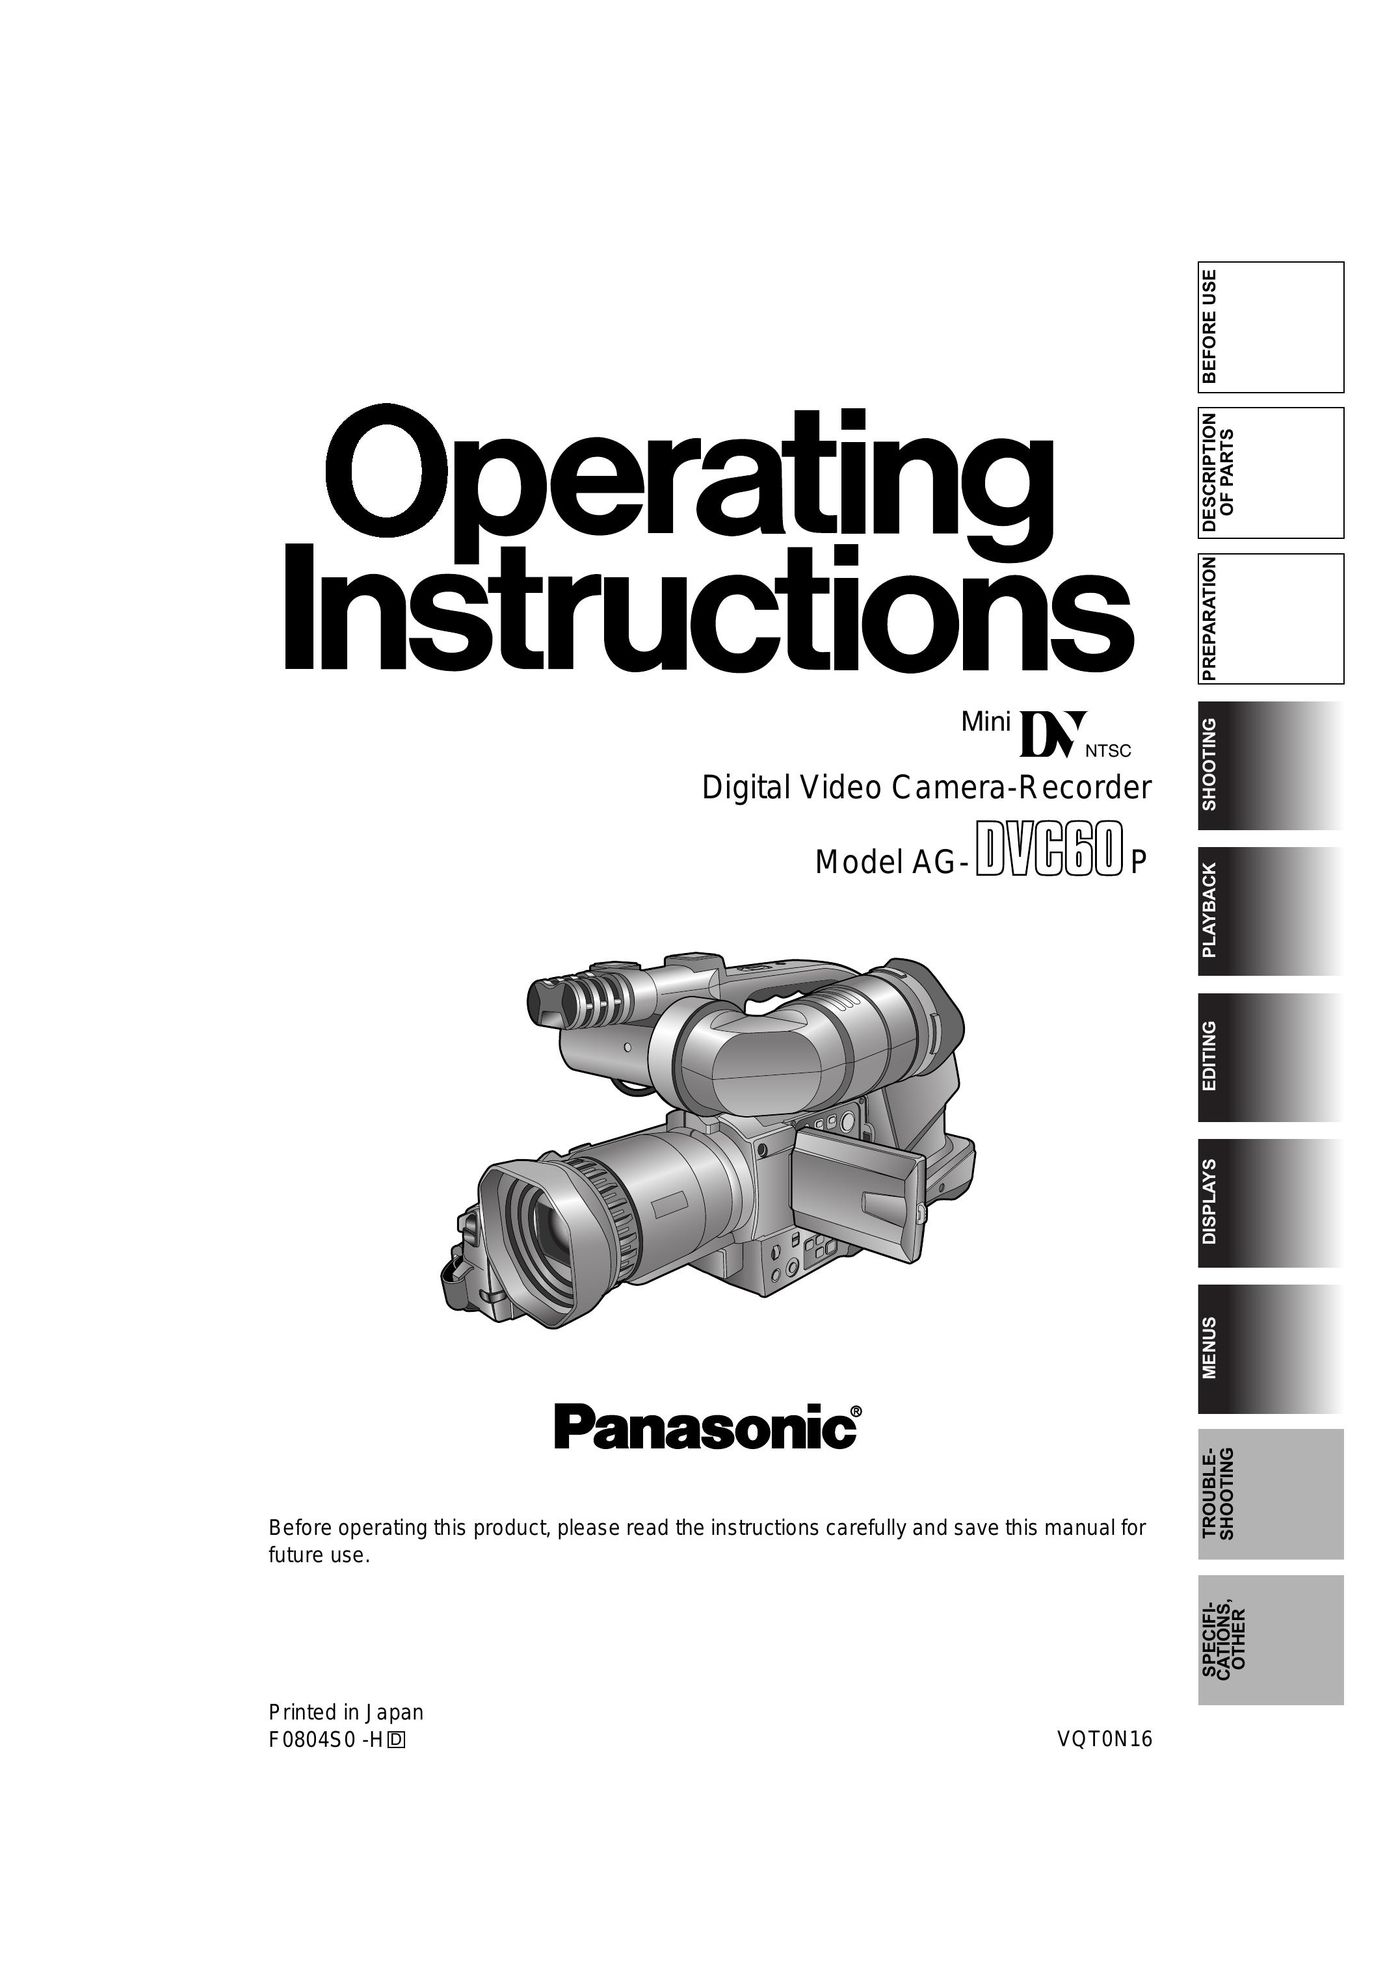 Panasonic AG-DVC60P DVR User Manual